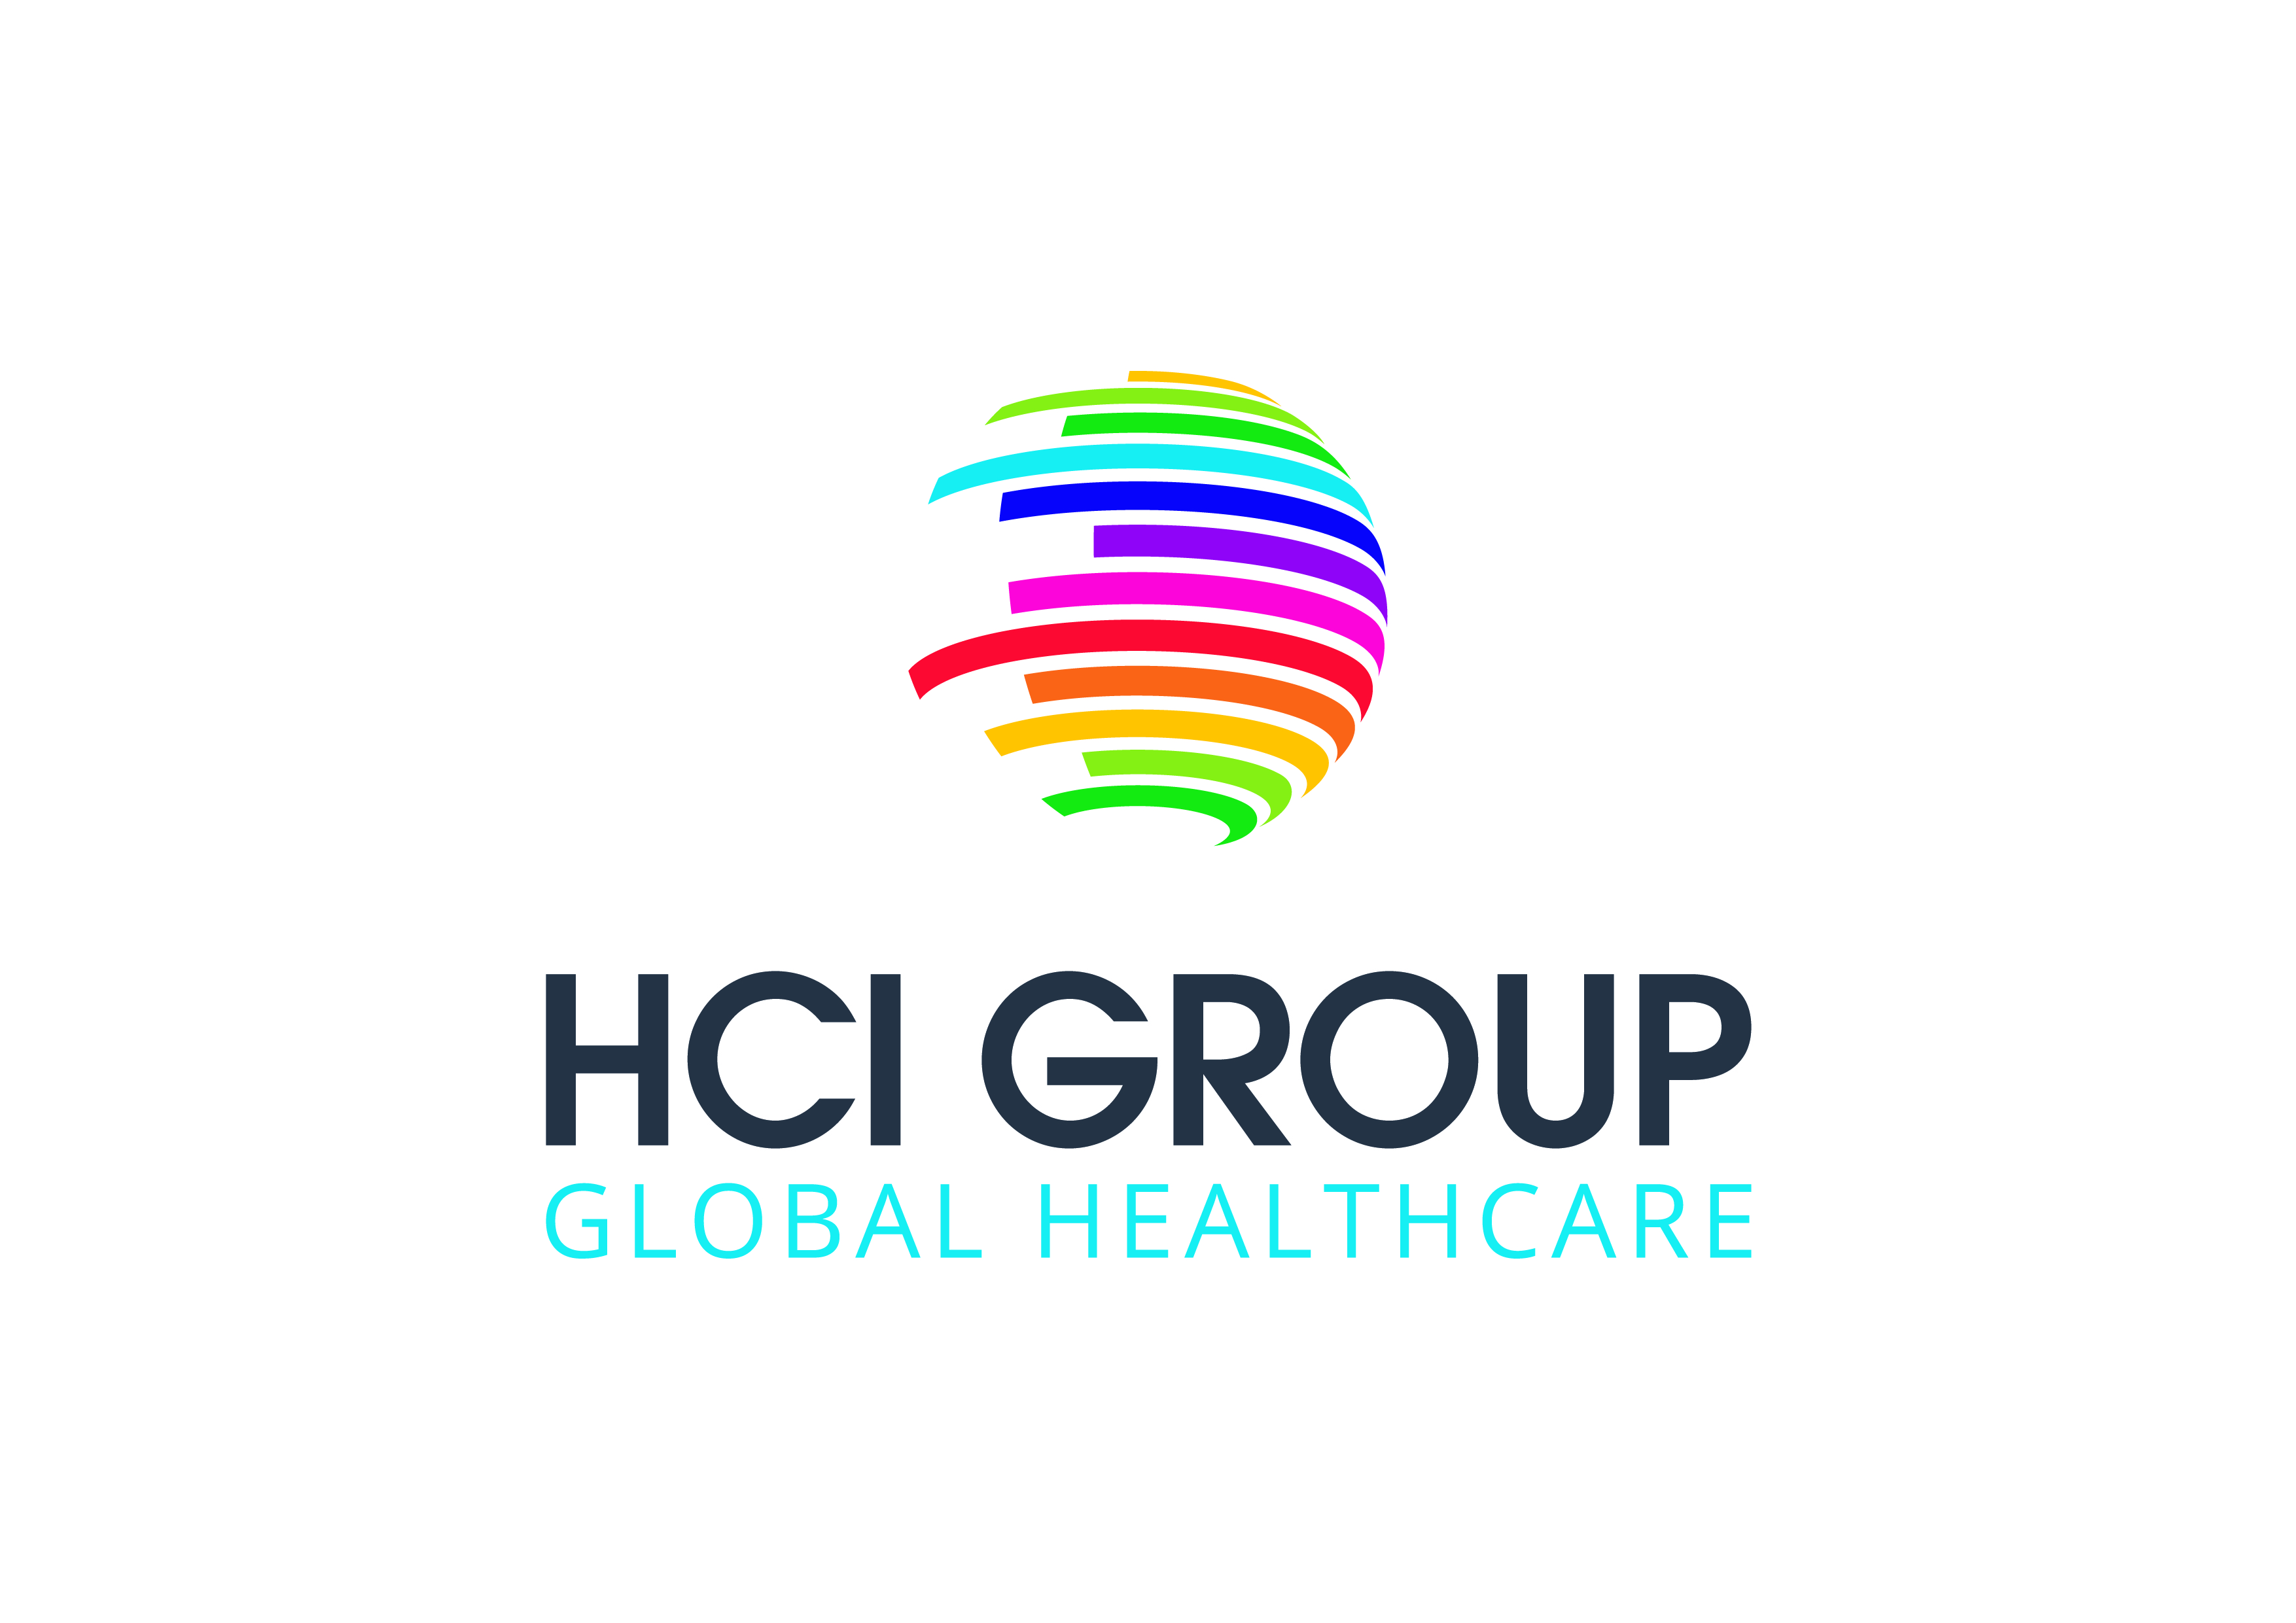 HCI Group